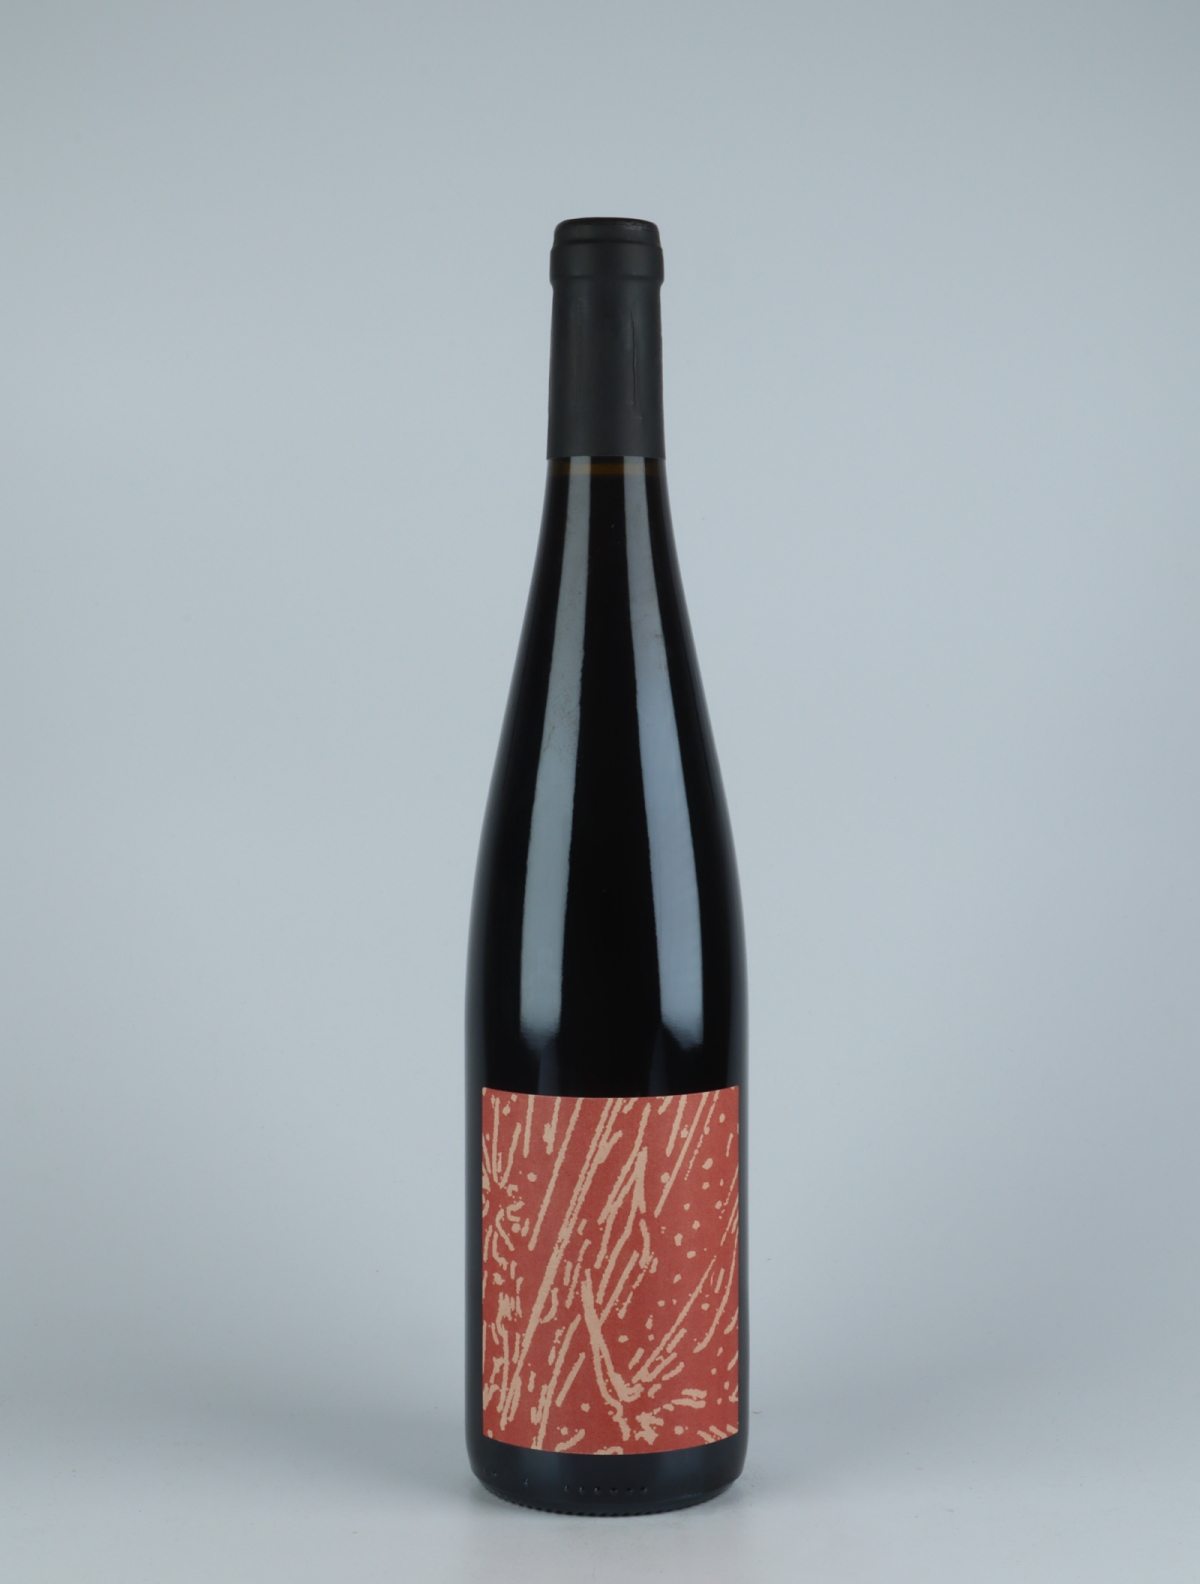 En flaske 2020 Le Farouche - Pinot Noir Rødvin fra Domaine Goepp, Alsace i Frankrig